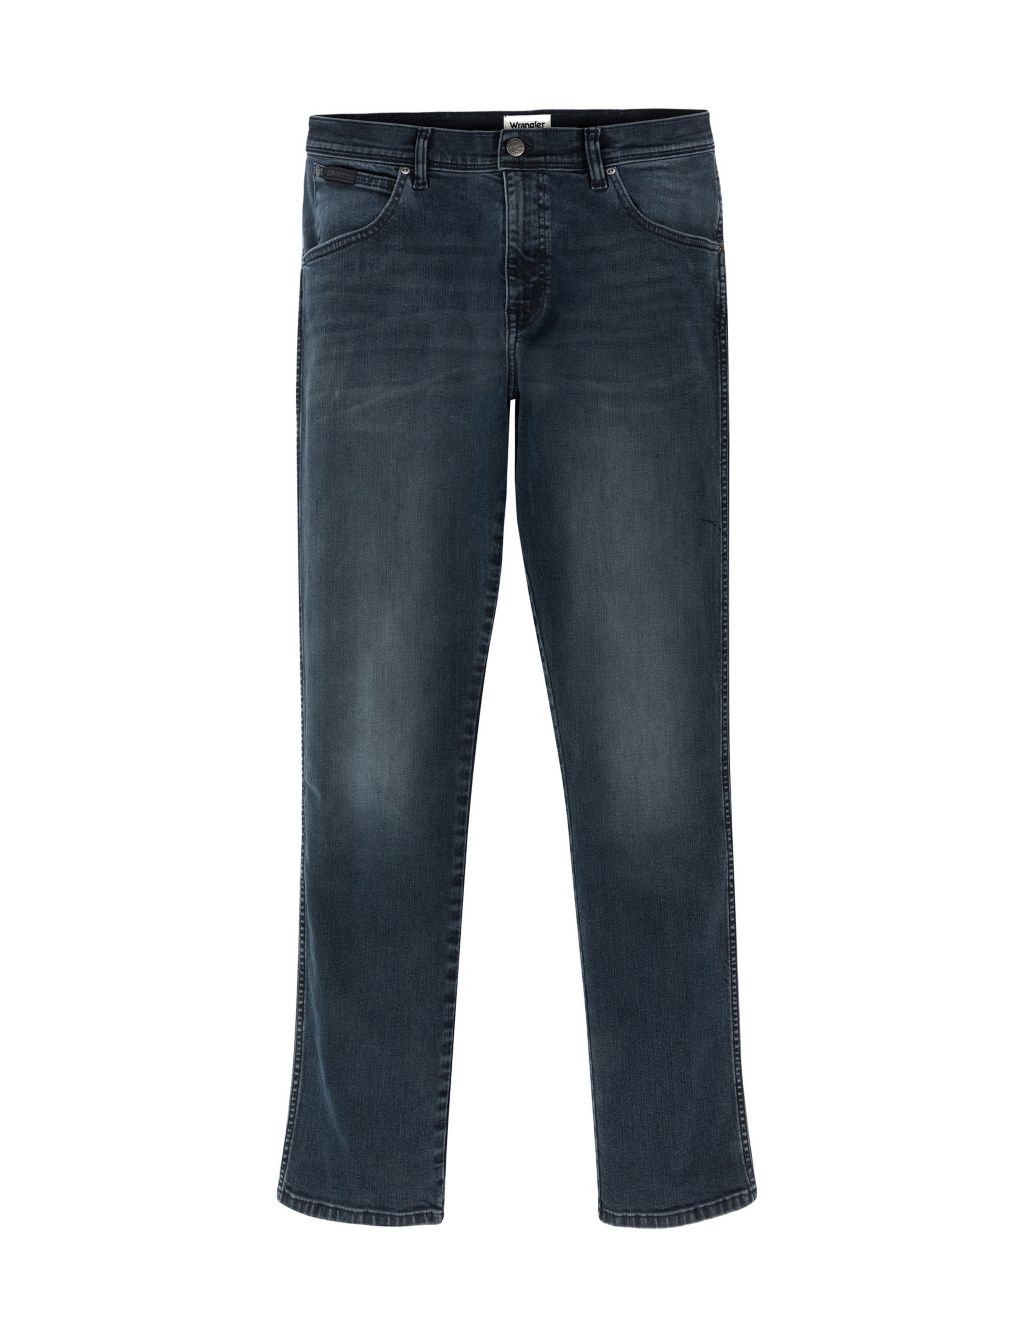 Texas Slim Fit 5 Pocket Jeans | Wrangler | M&S